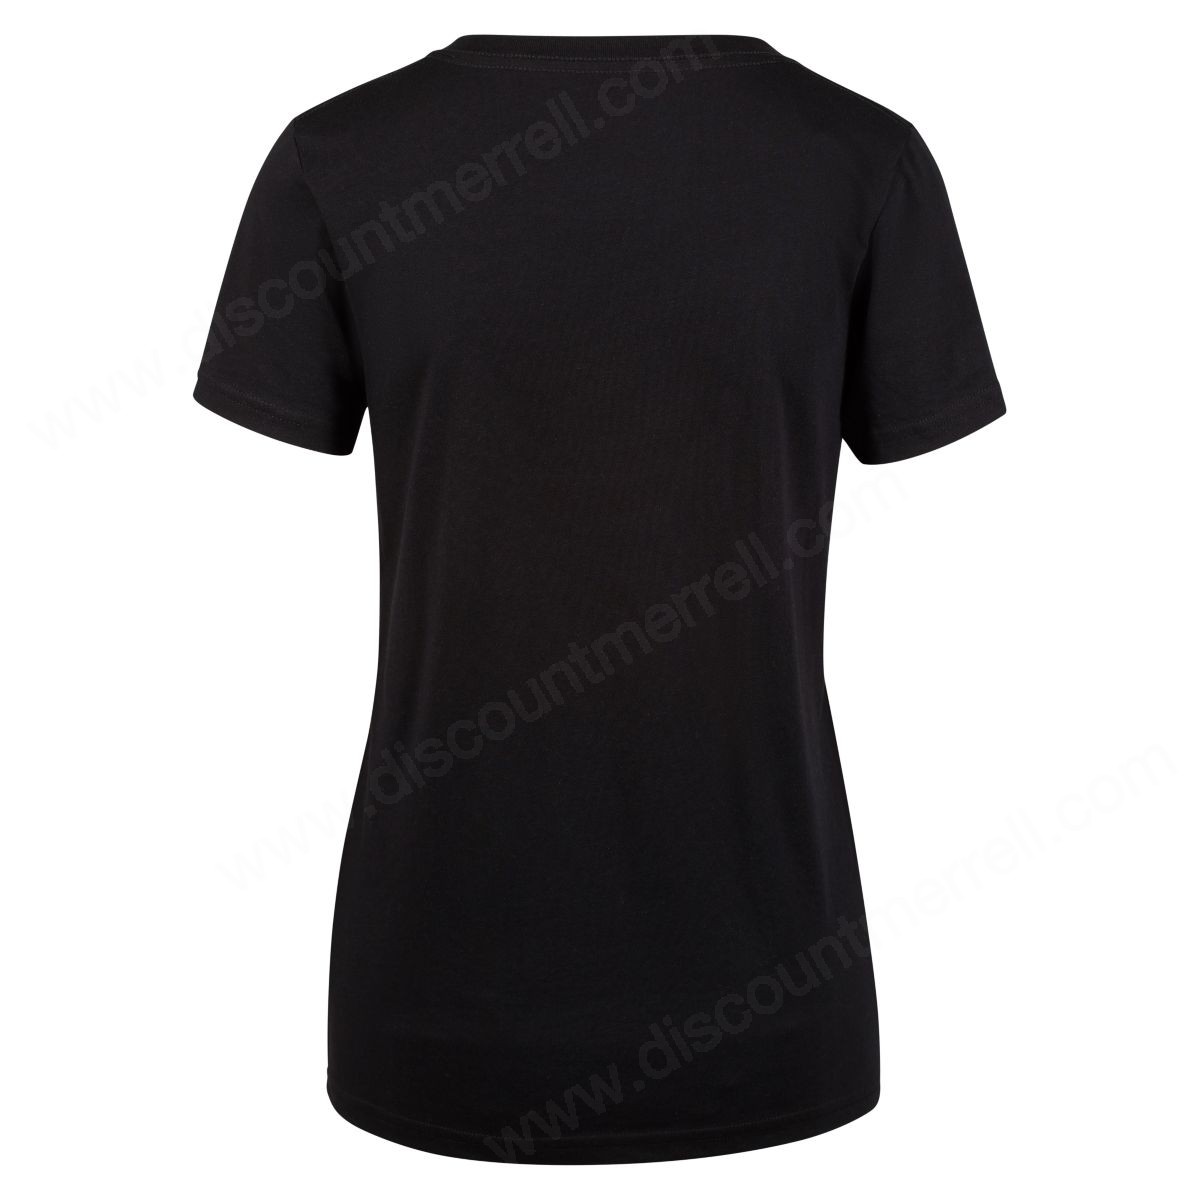 Merrell Woman's M Logo T-Shirts Black/reflective Grey/black - -1